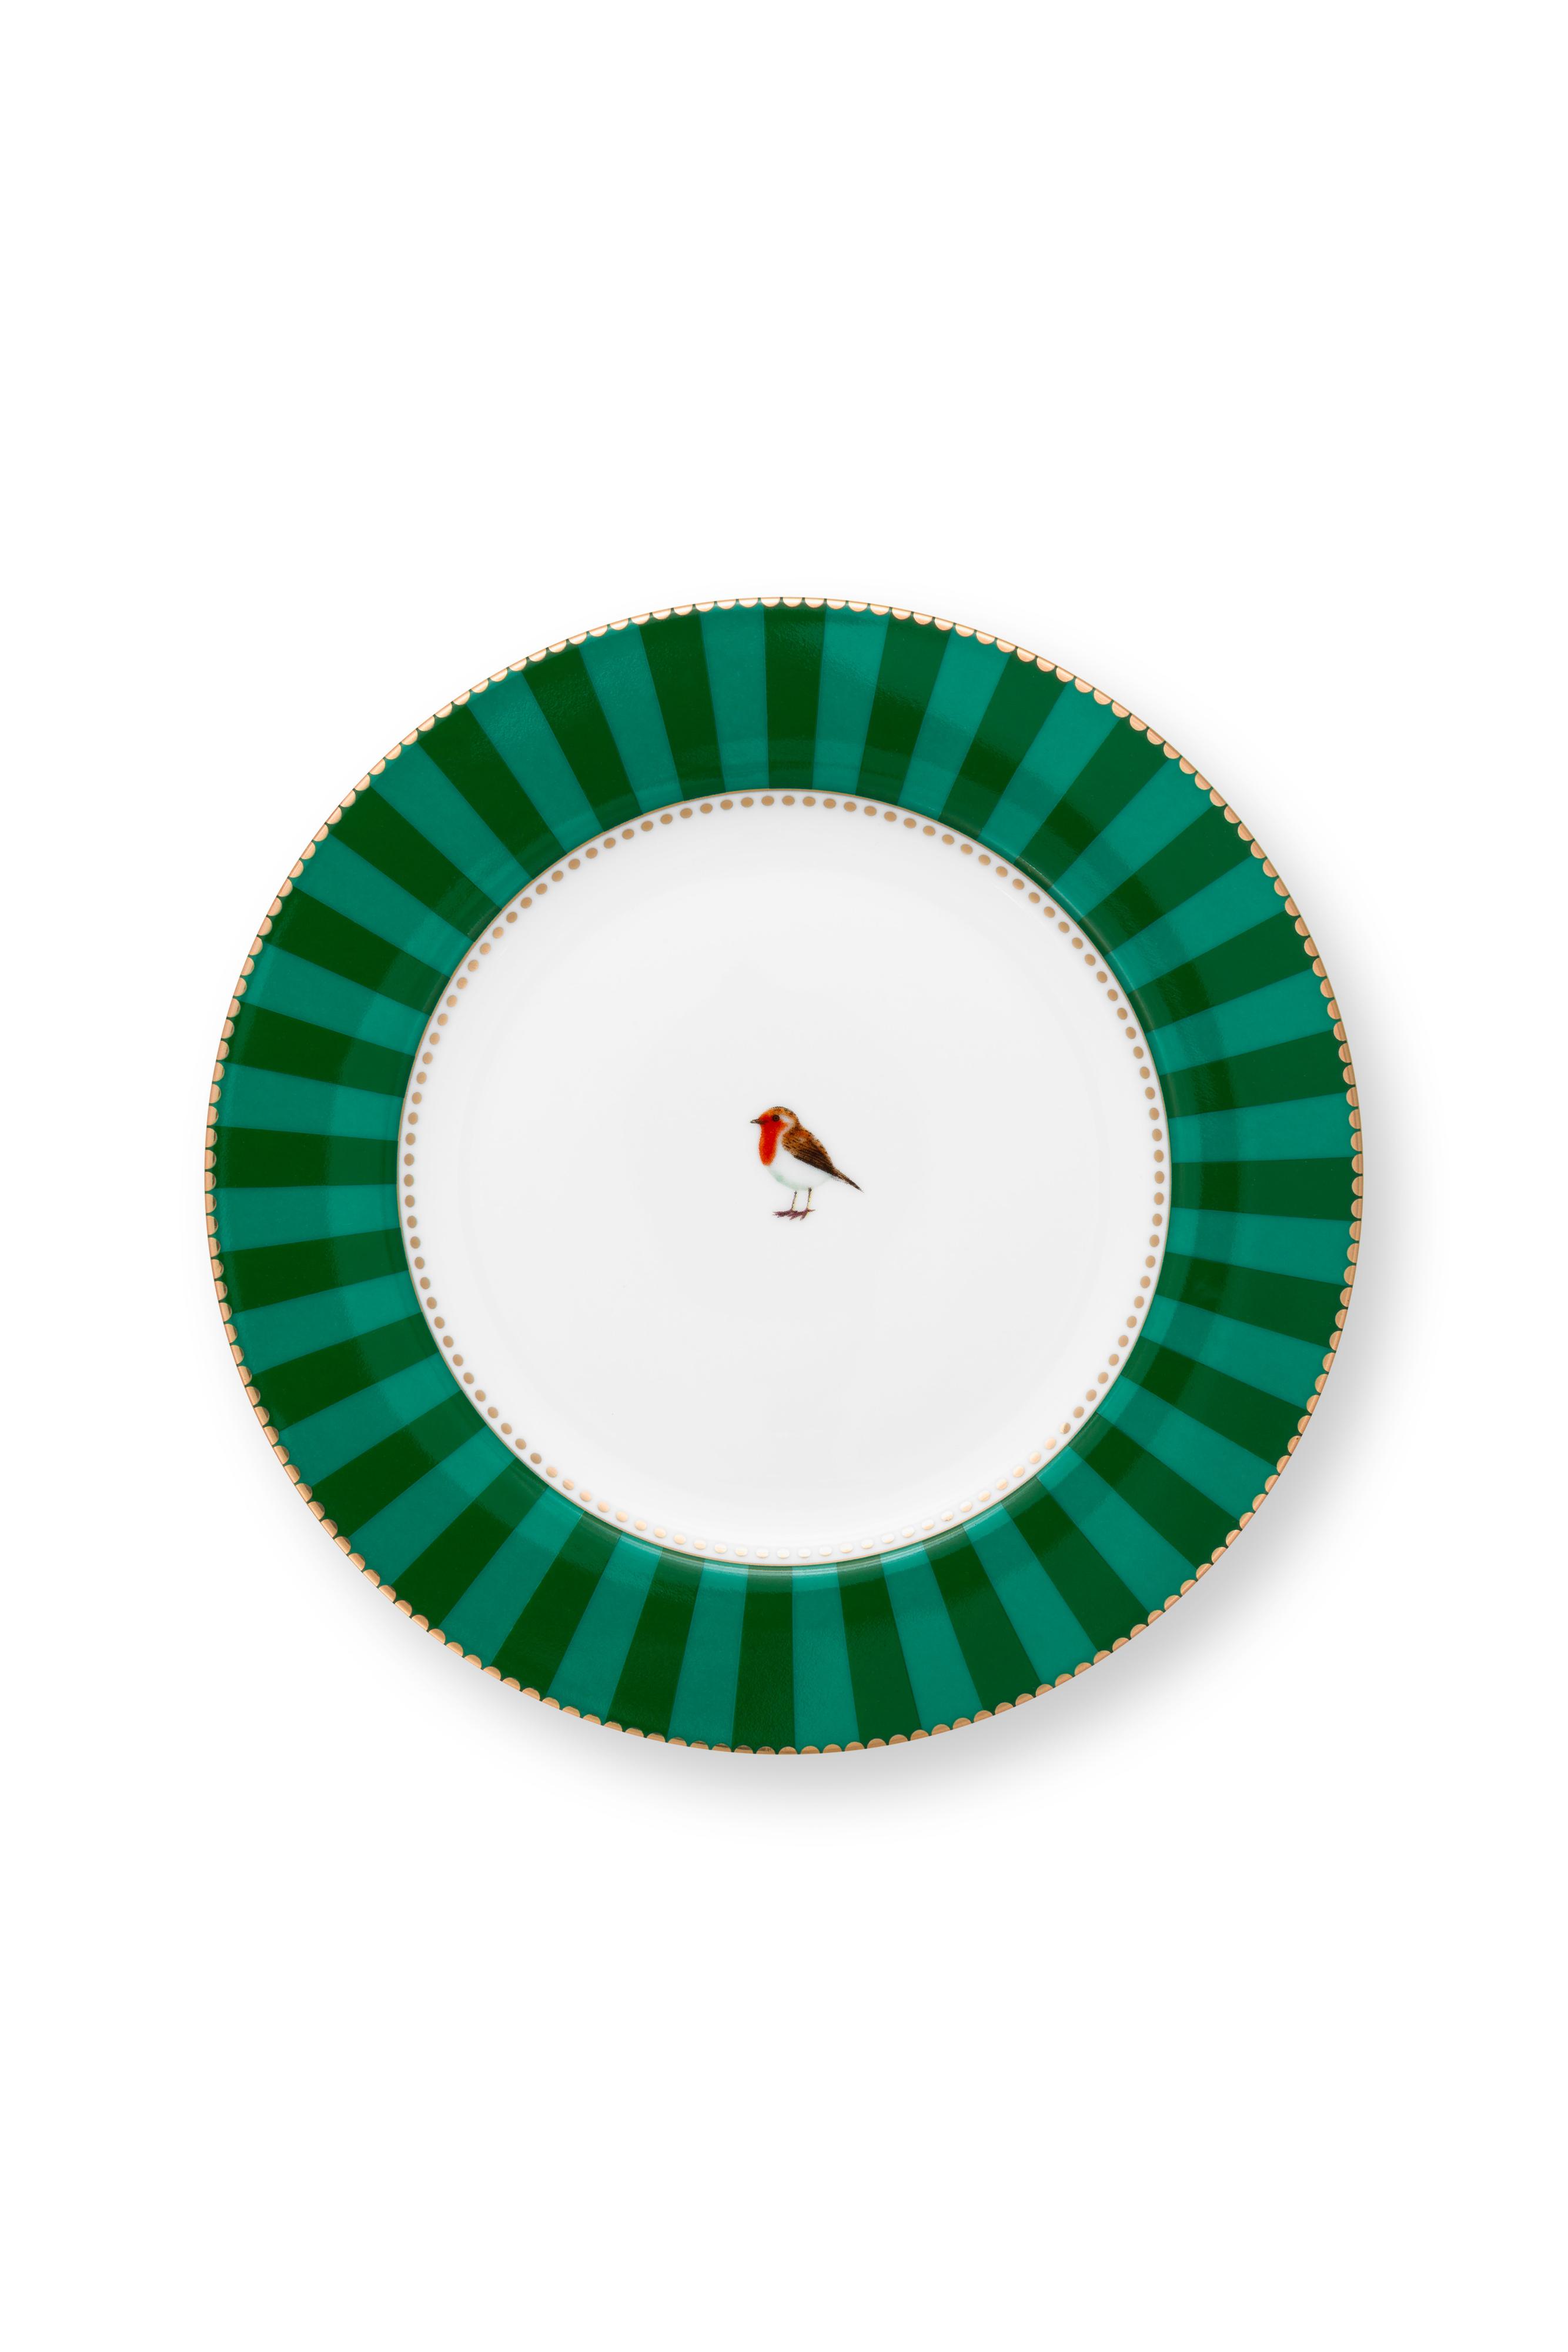 Plate Love Birds Stripes Emerald-green 17cm Gift